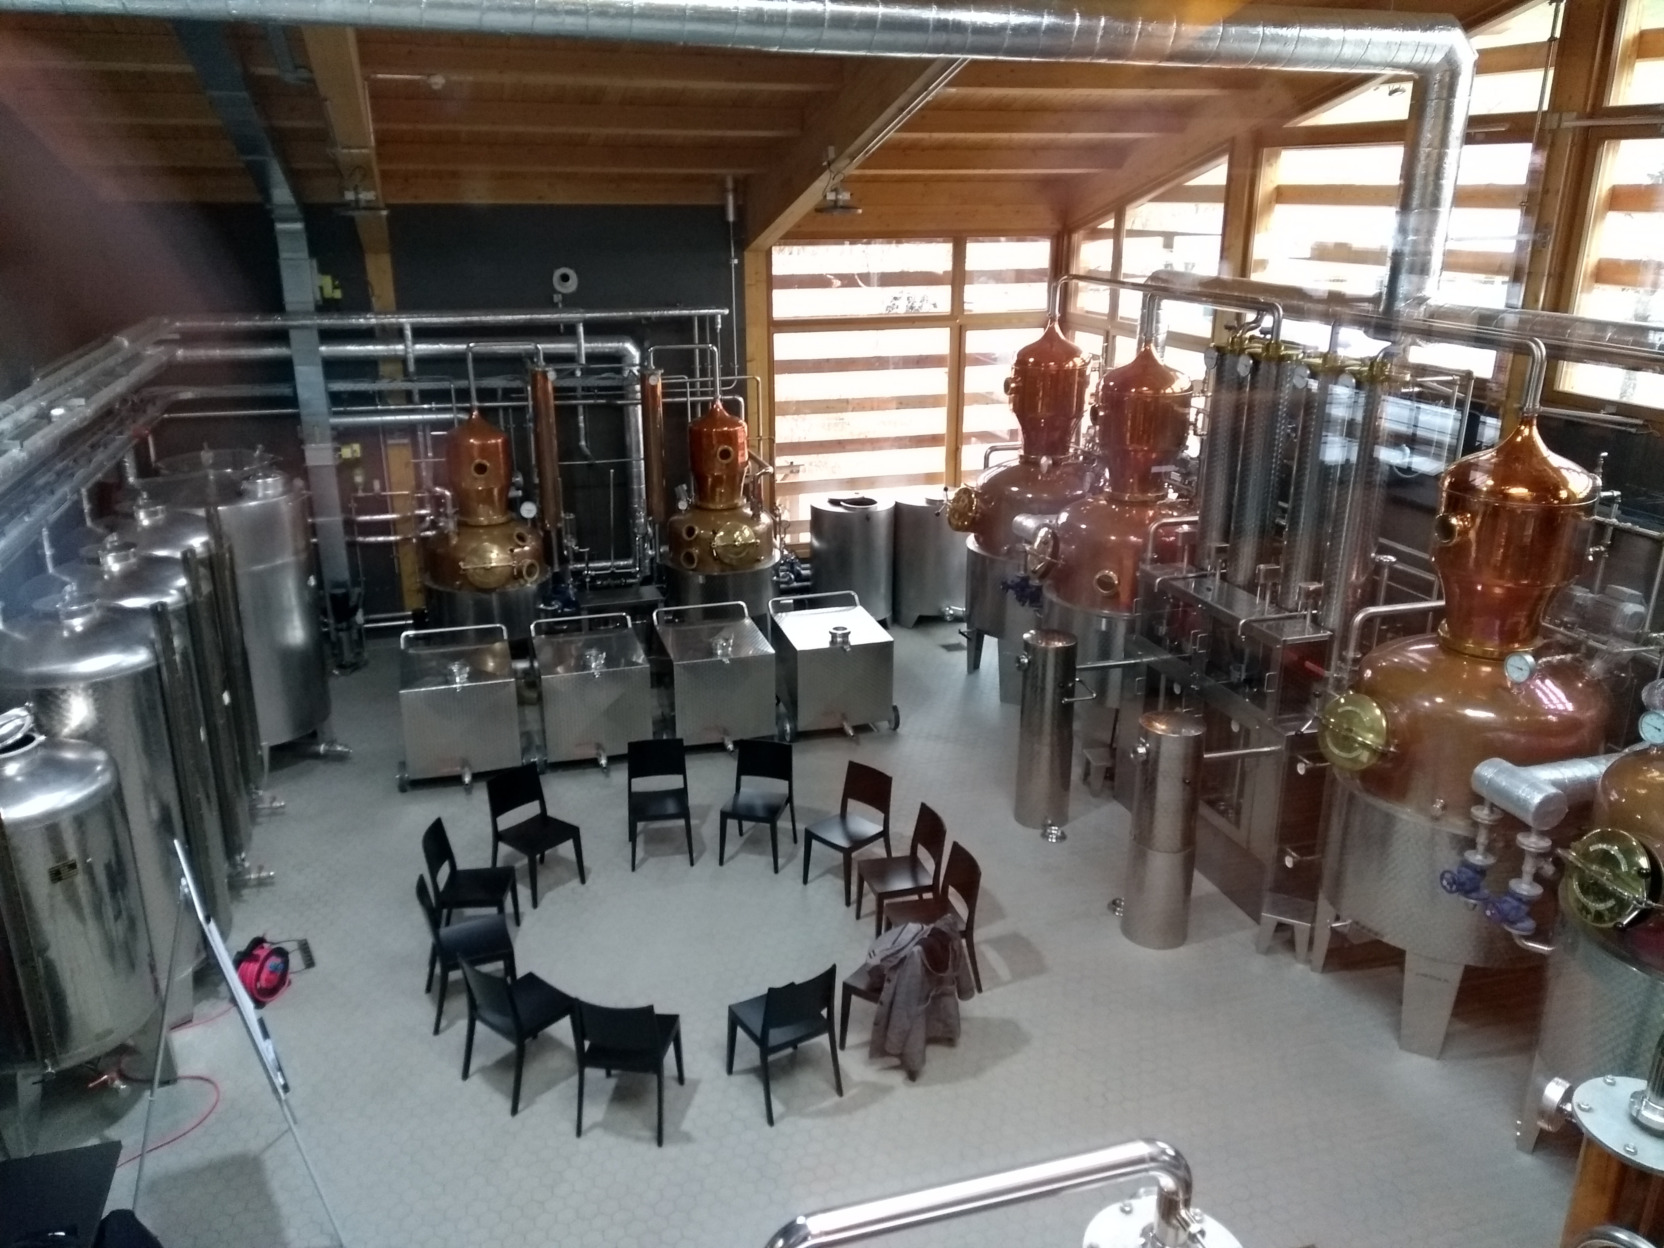 Talking room between the distilling machines